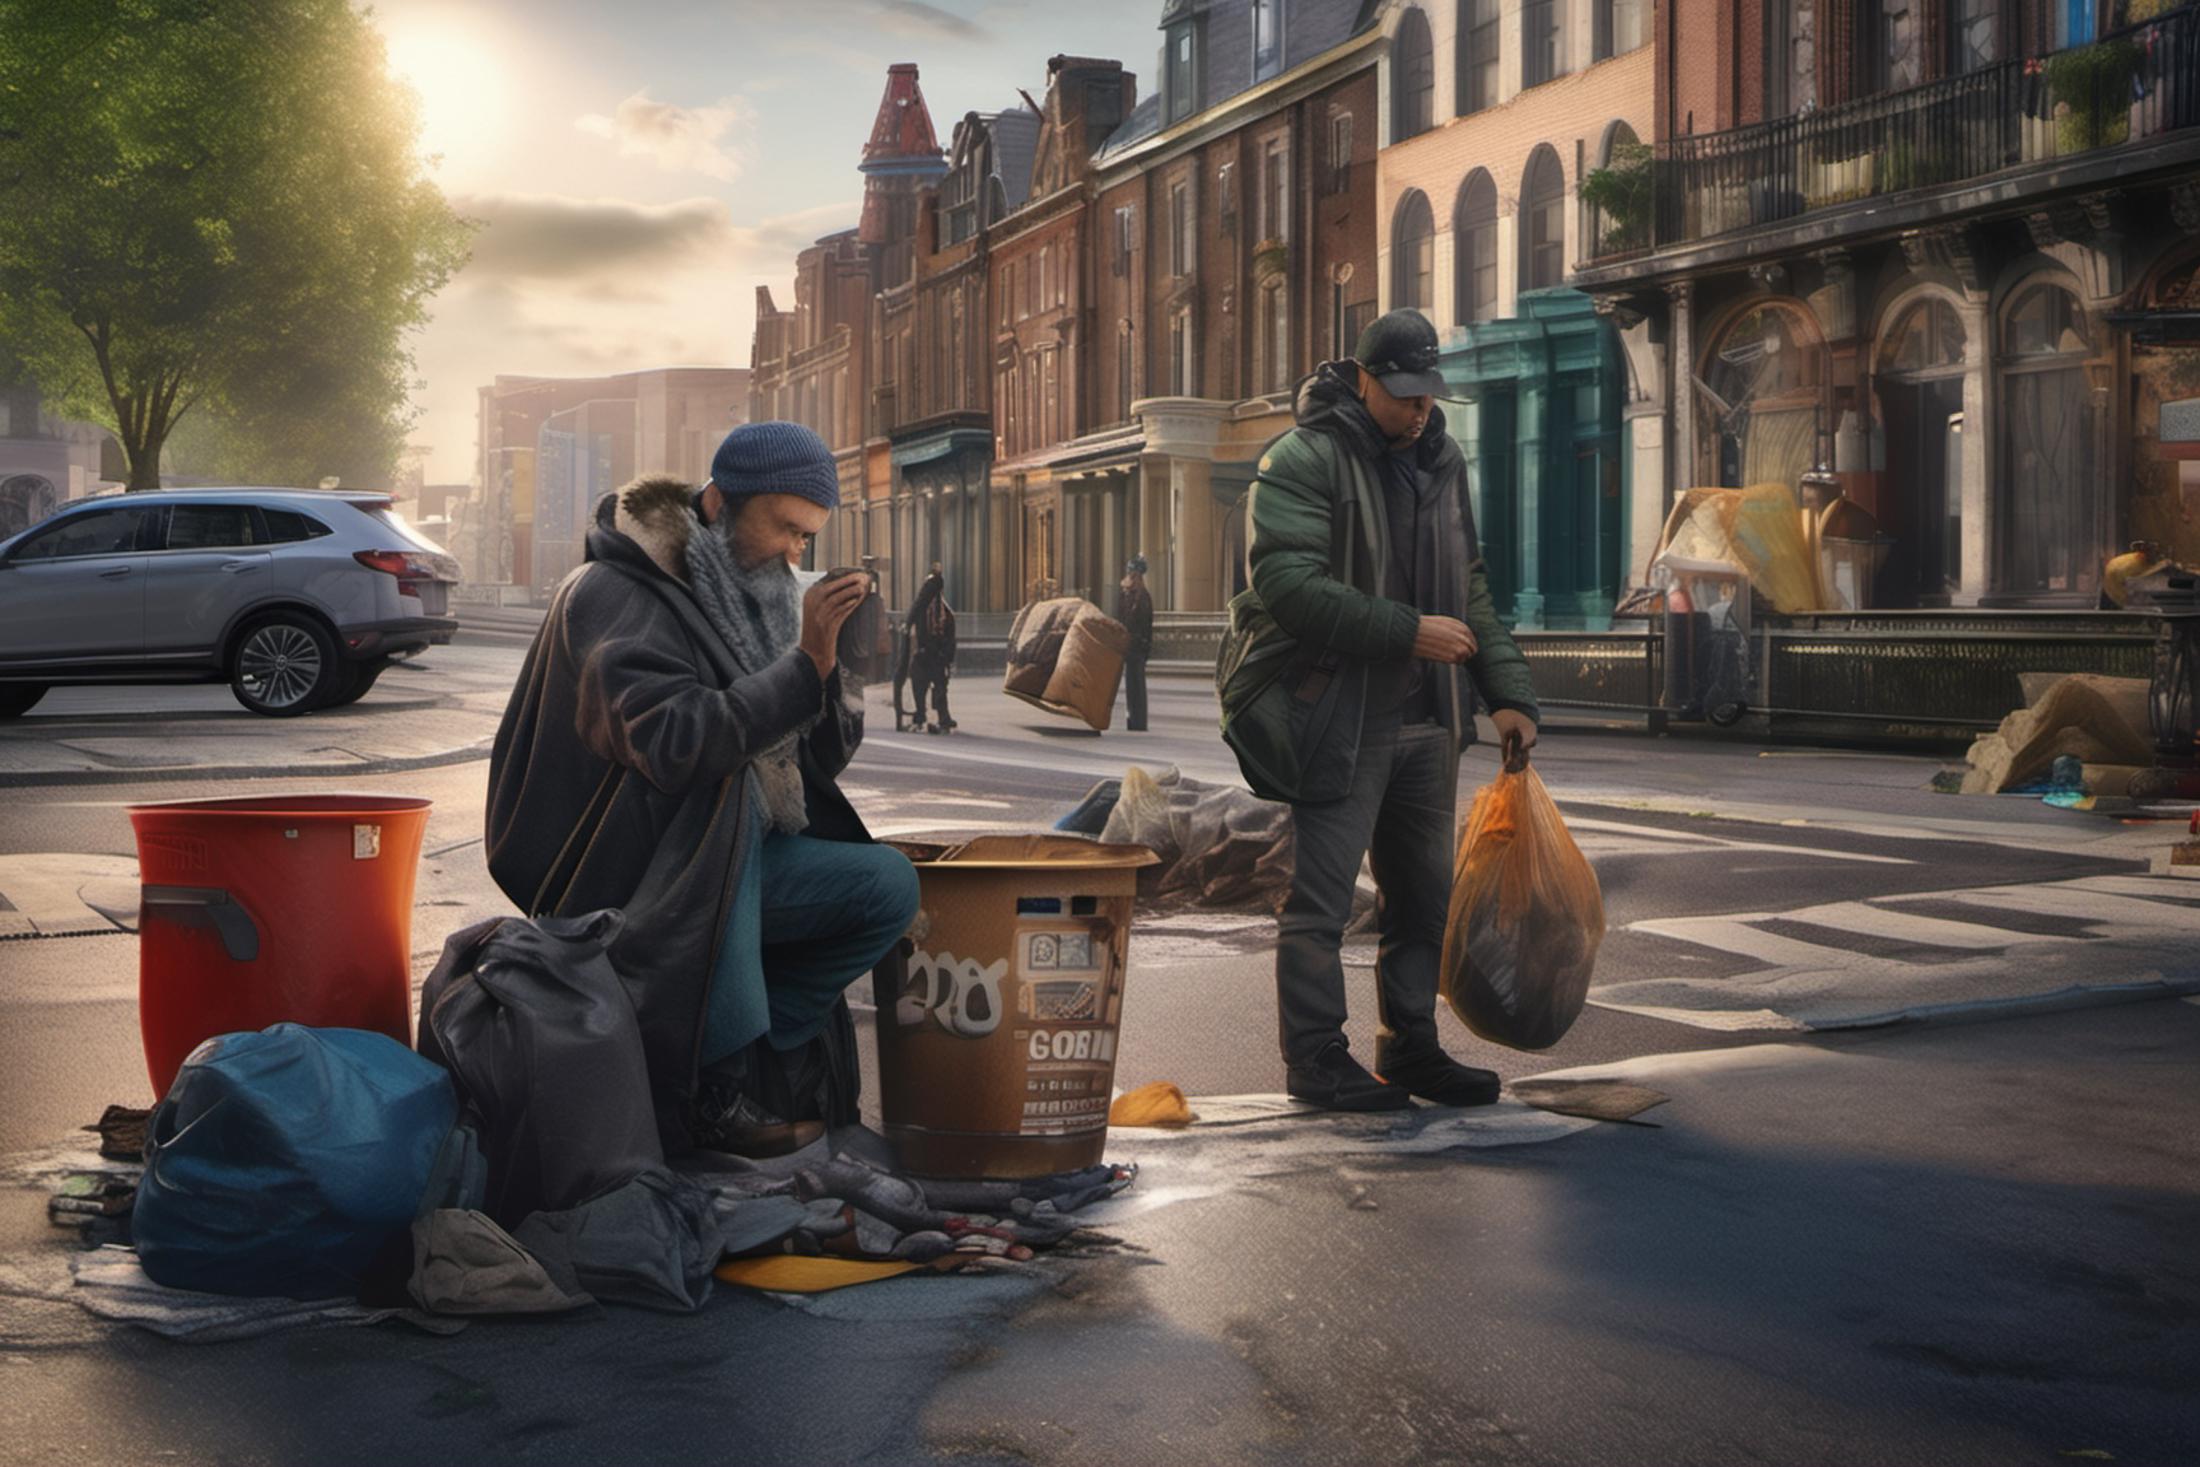 Craig Severance - Homeless In America image by craigindylimotransport169